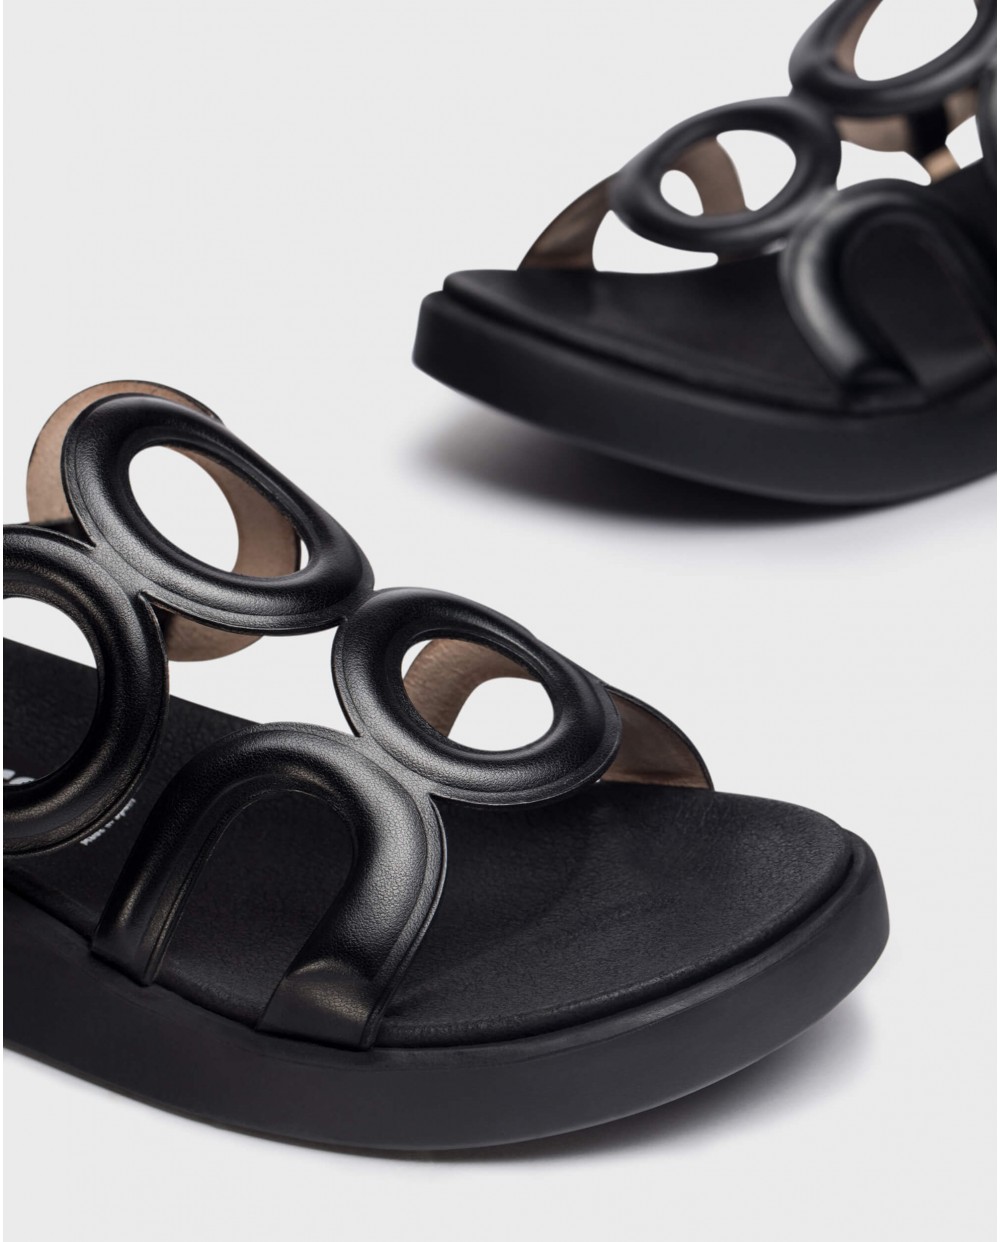 Black Arizona sandals